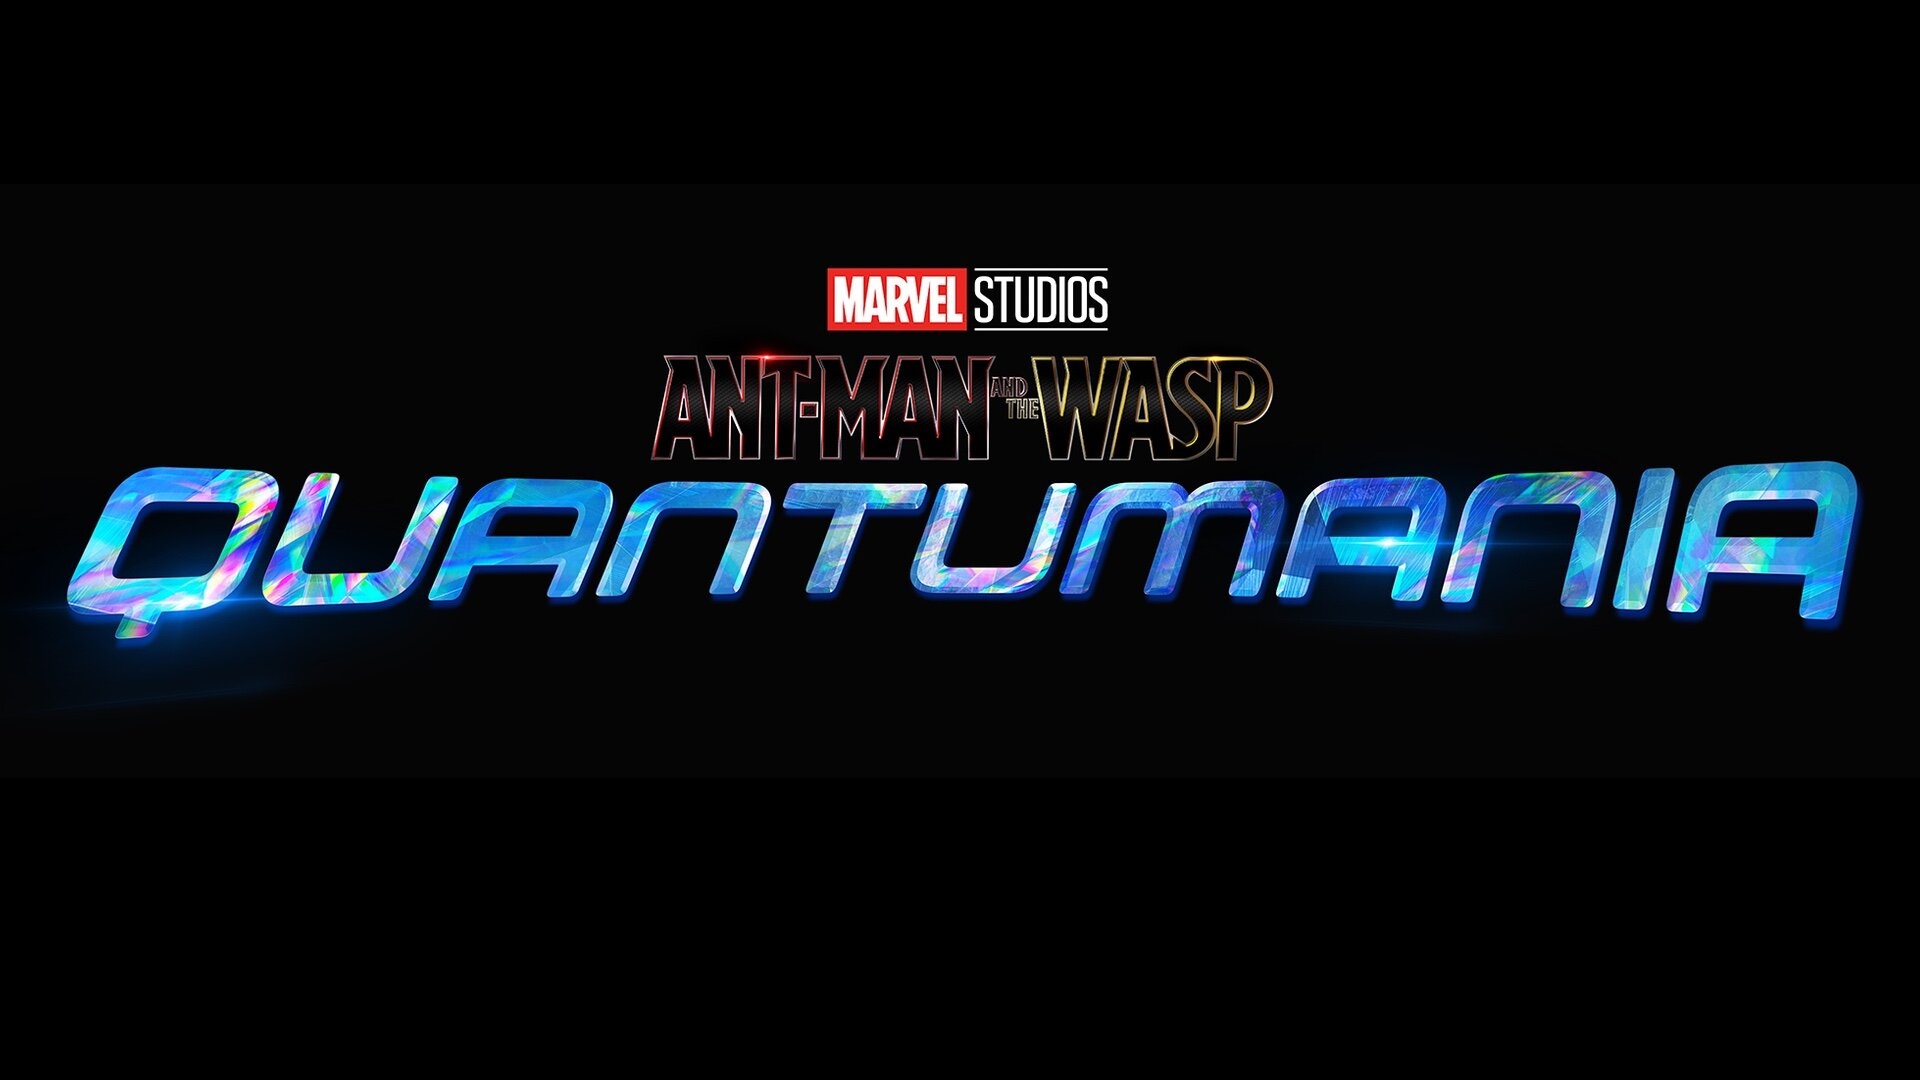 Ant-Man and the Wasp: Quantumania: An American superhero film based on Marvel Comics, Logo. 1920x1080 Full HD Wallpaper.